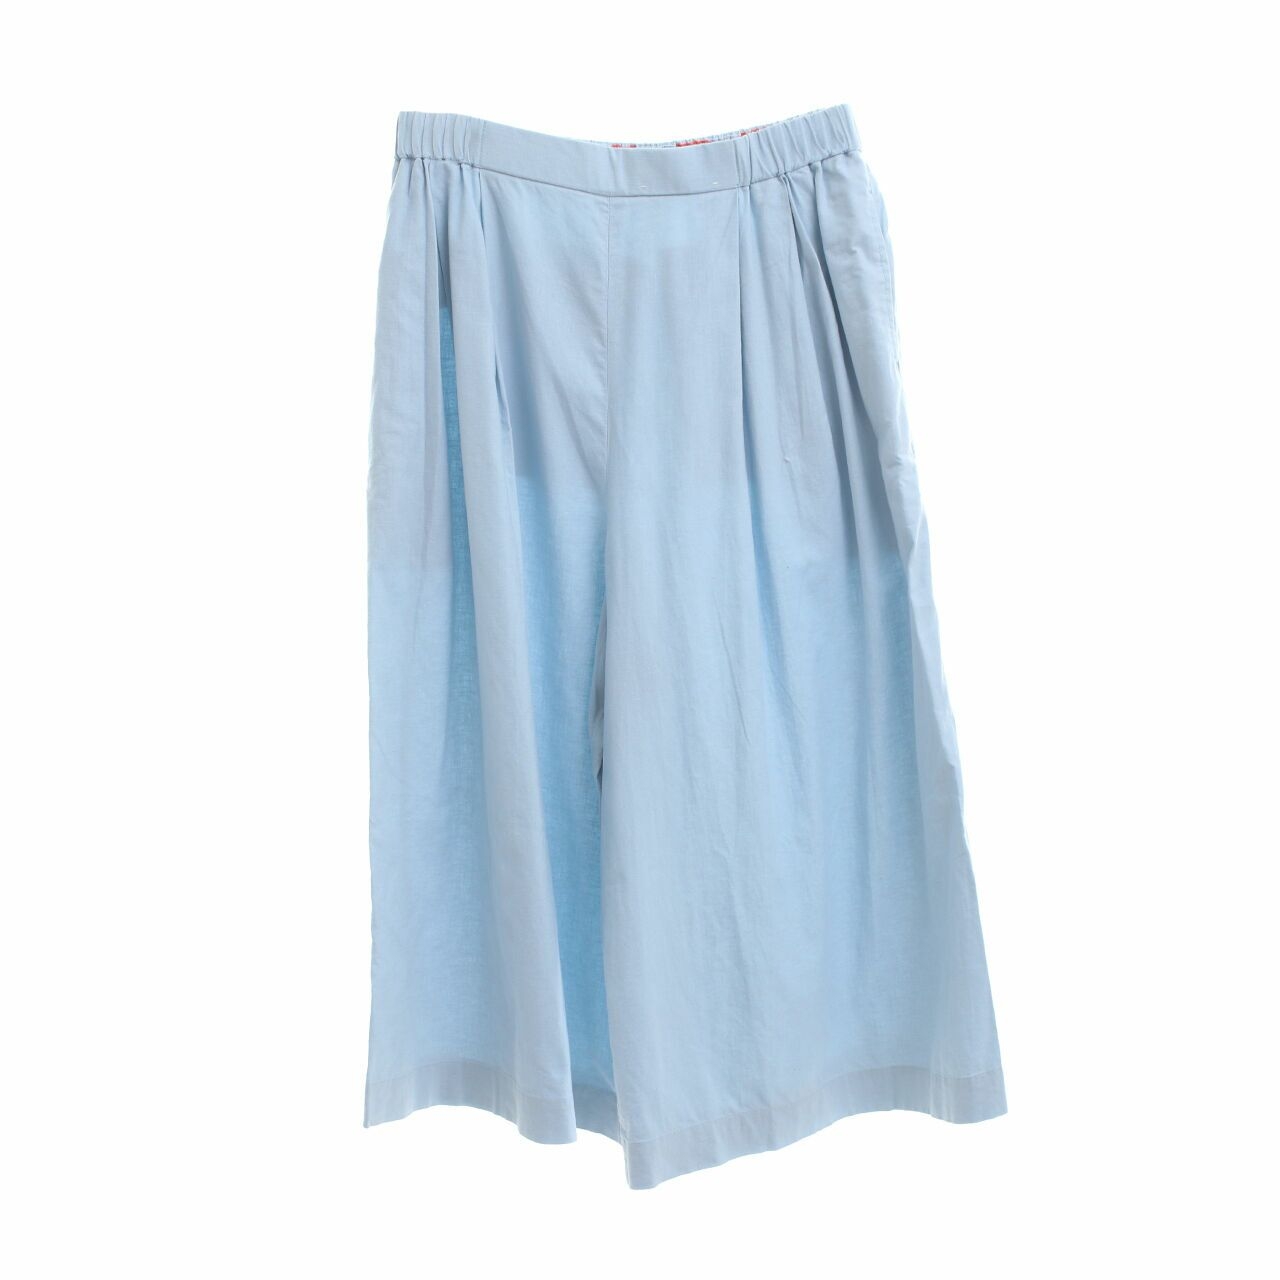 UNIQLO Light Blue Culottes Long pants